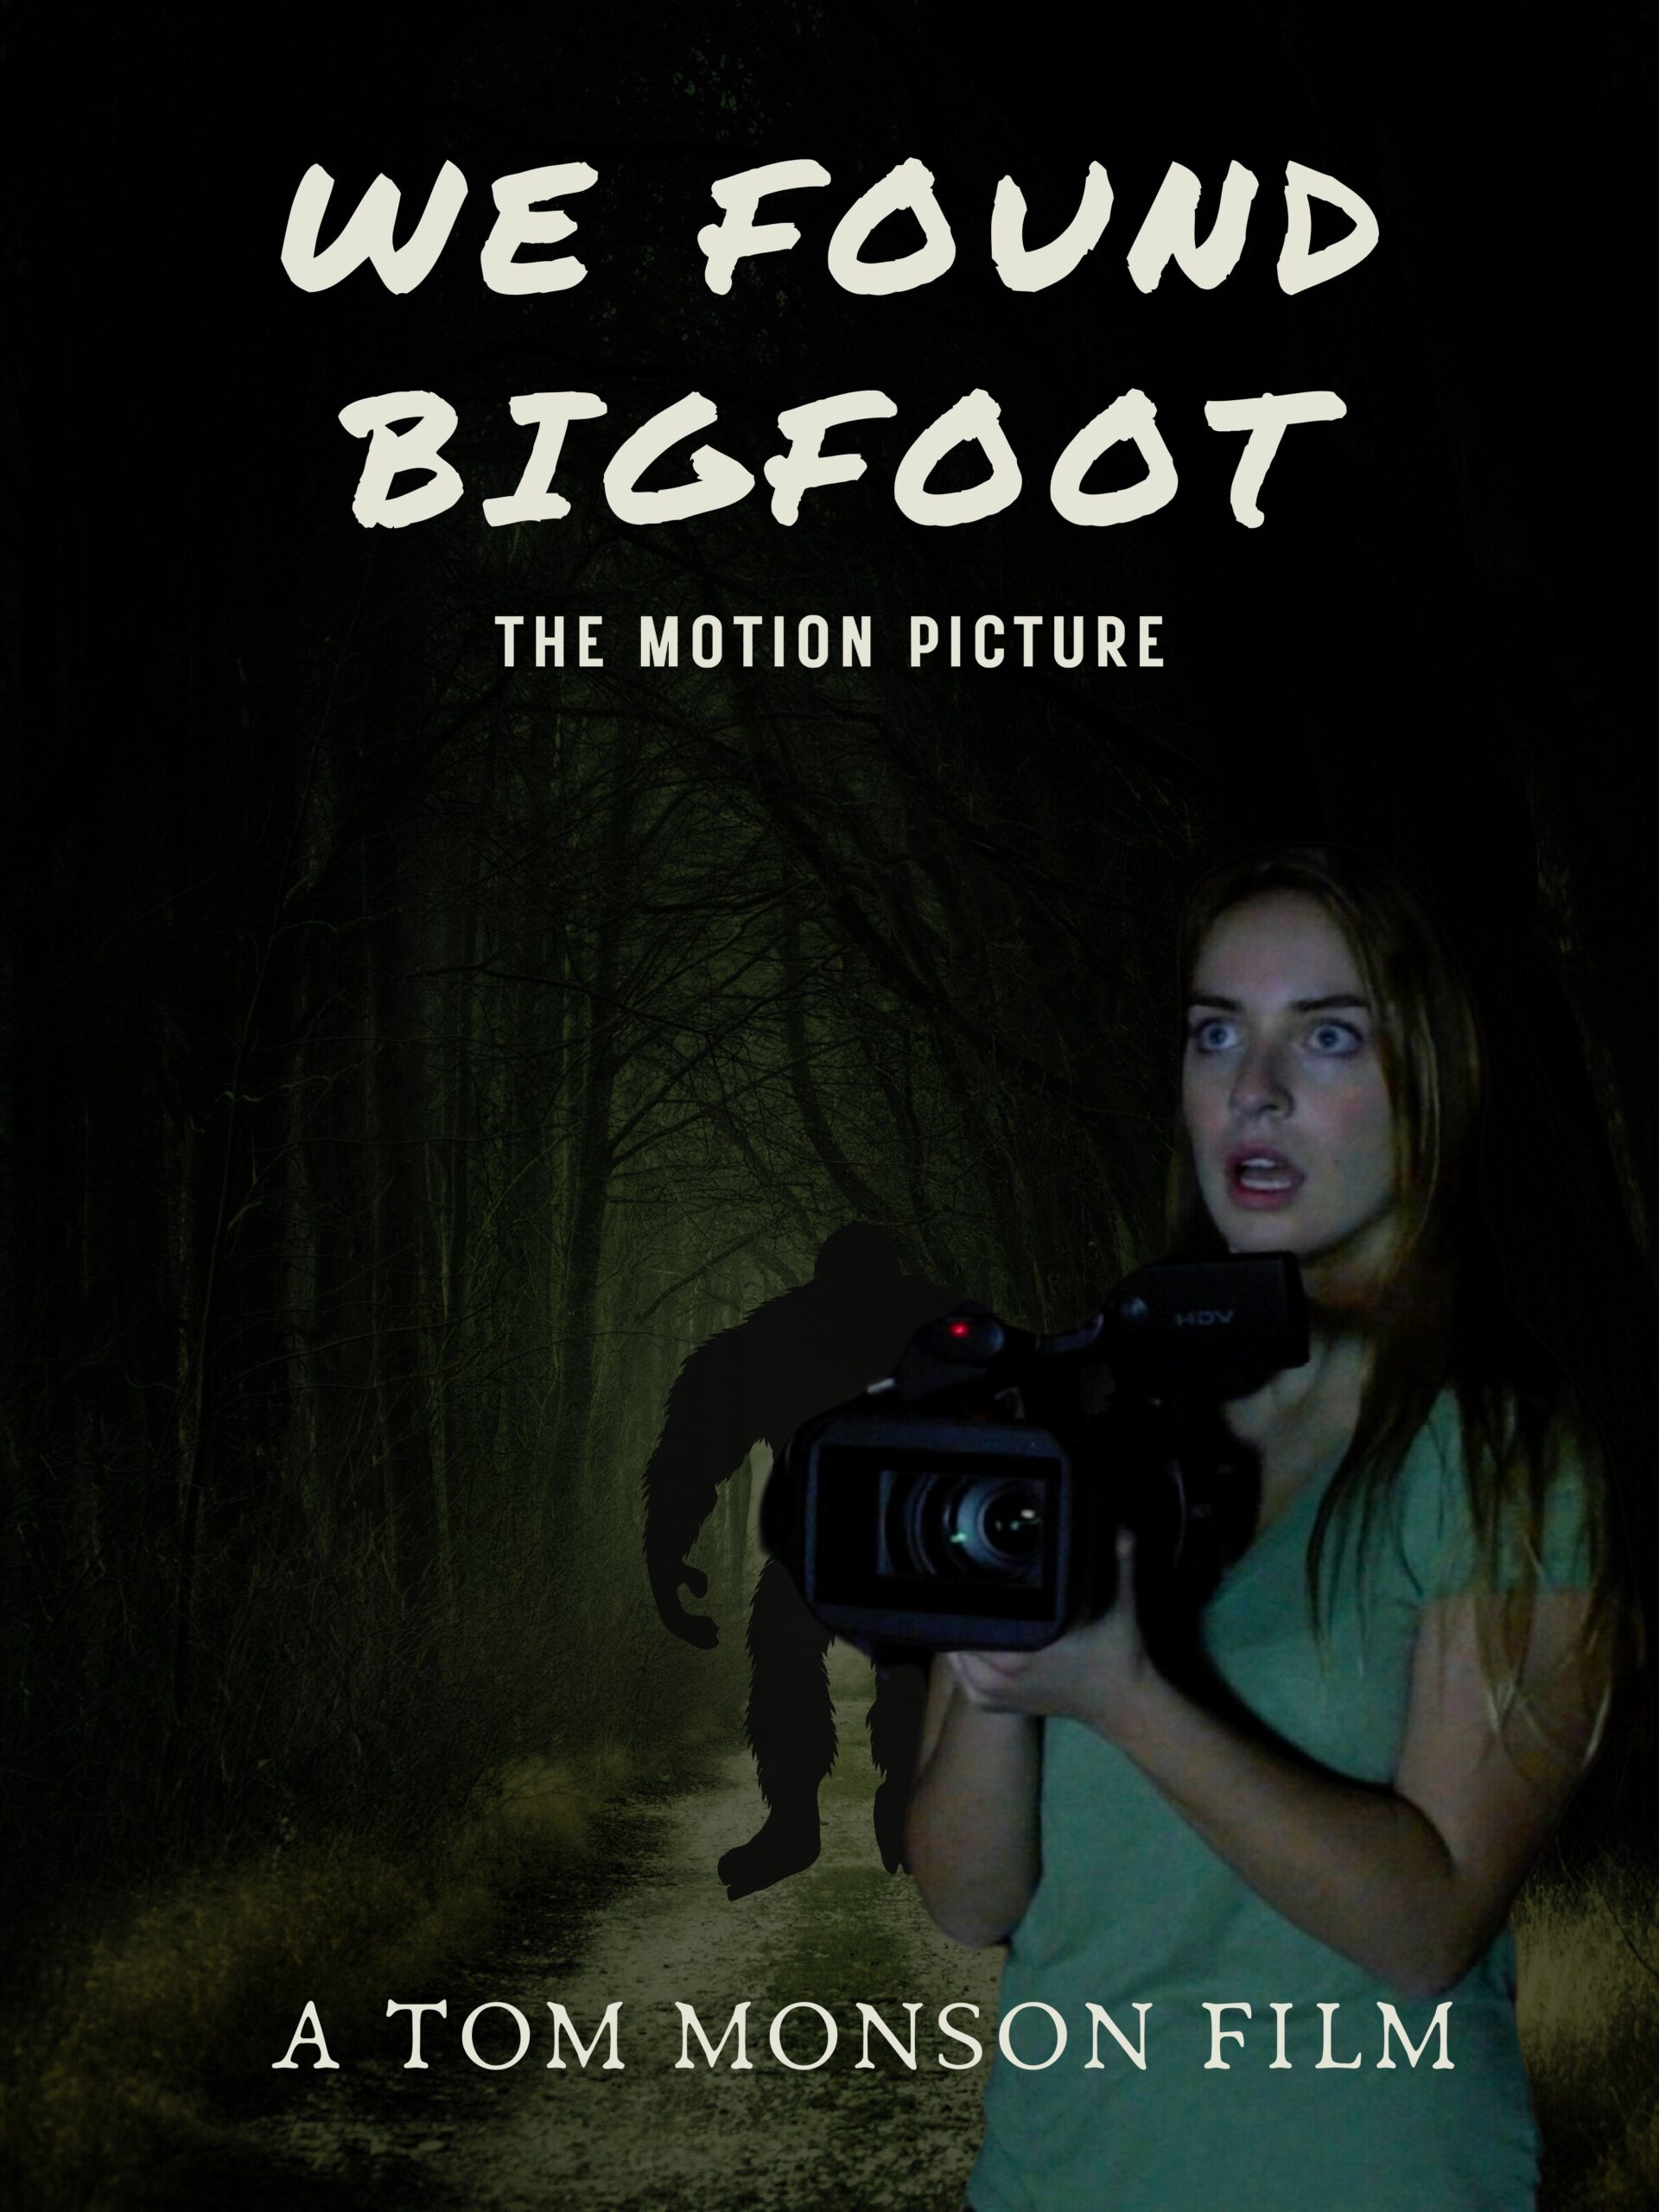 Remarkable Adventure Film We Found Bigfoot Poster